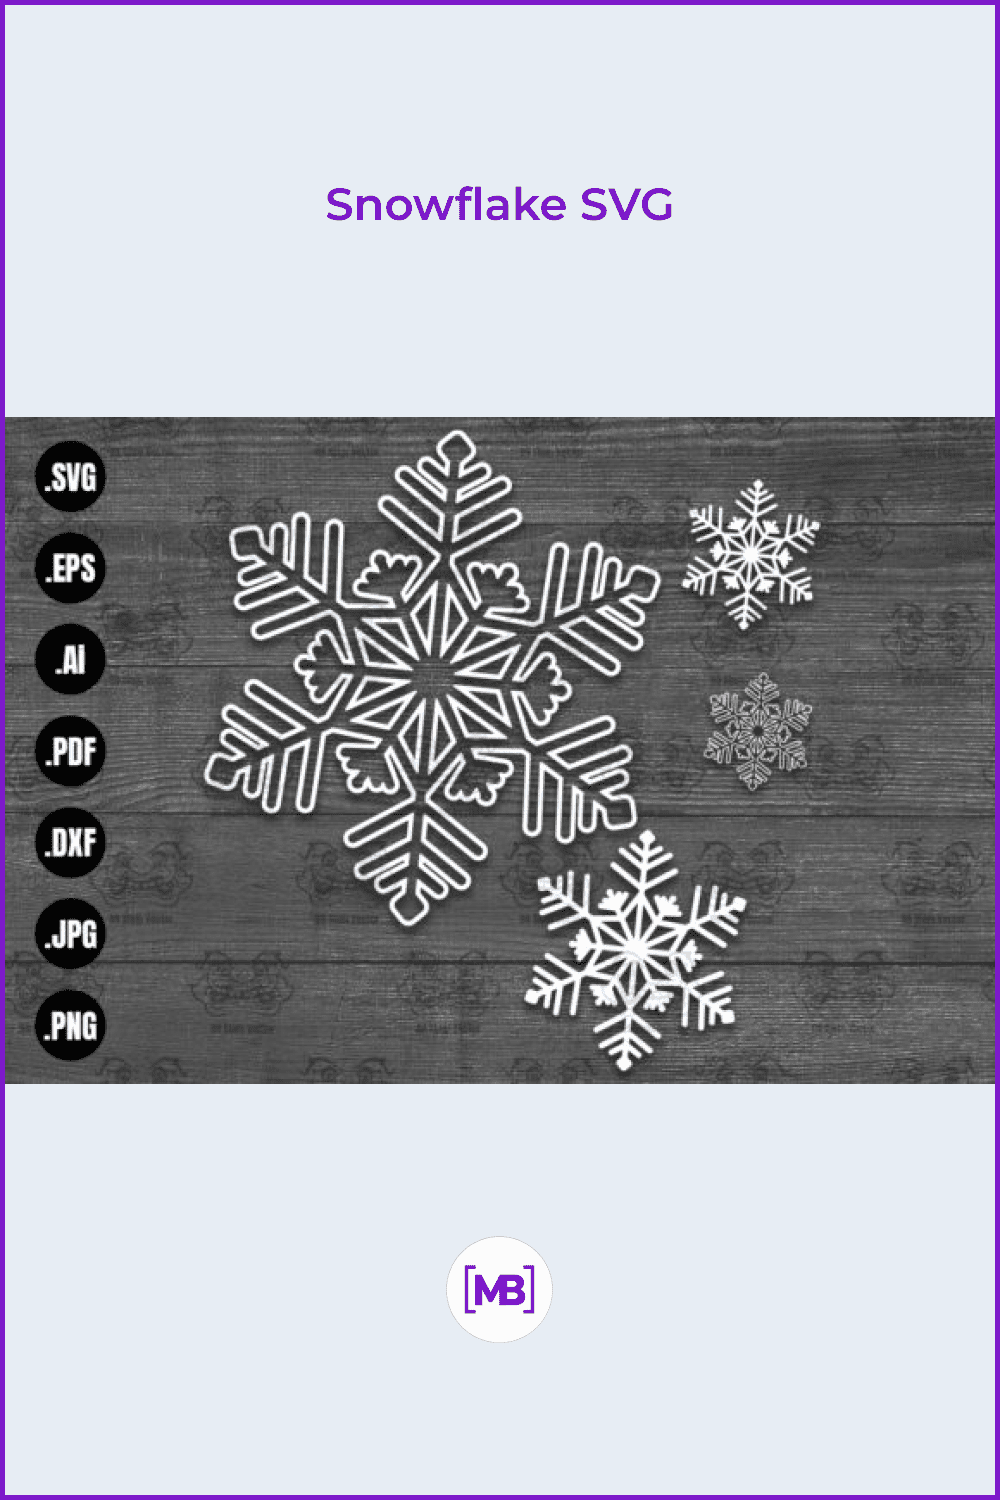 Snowflake SVG.